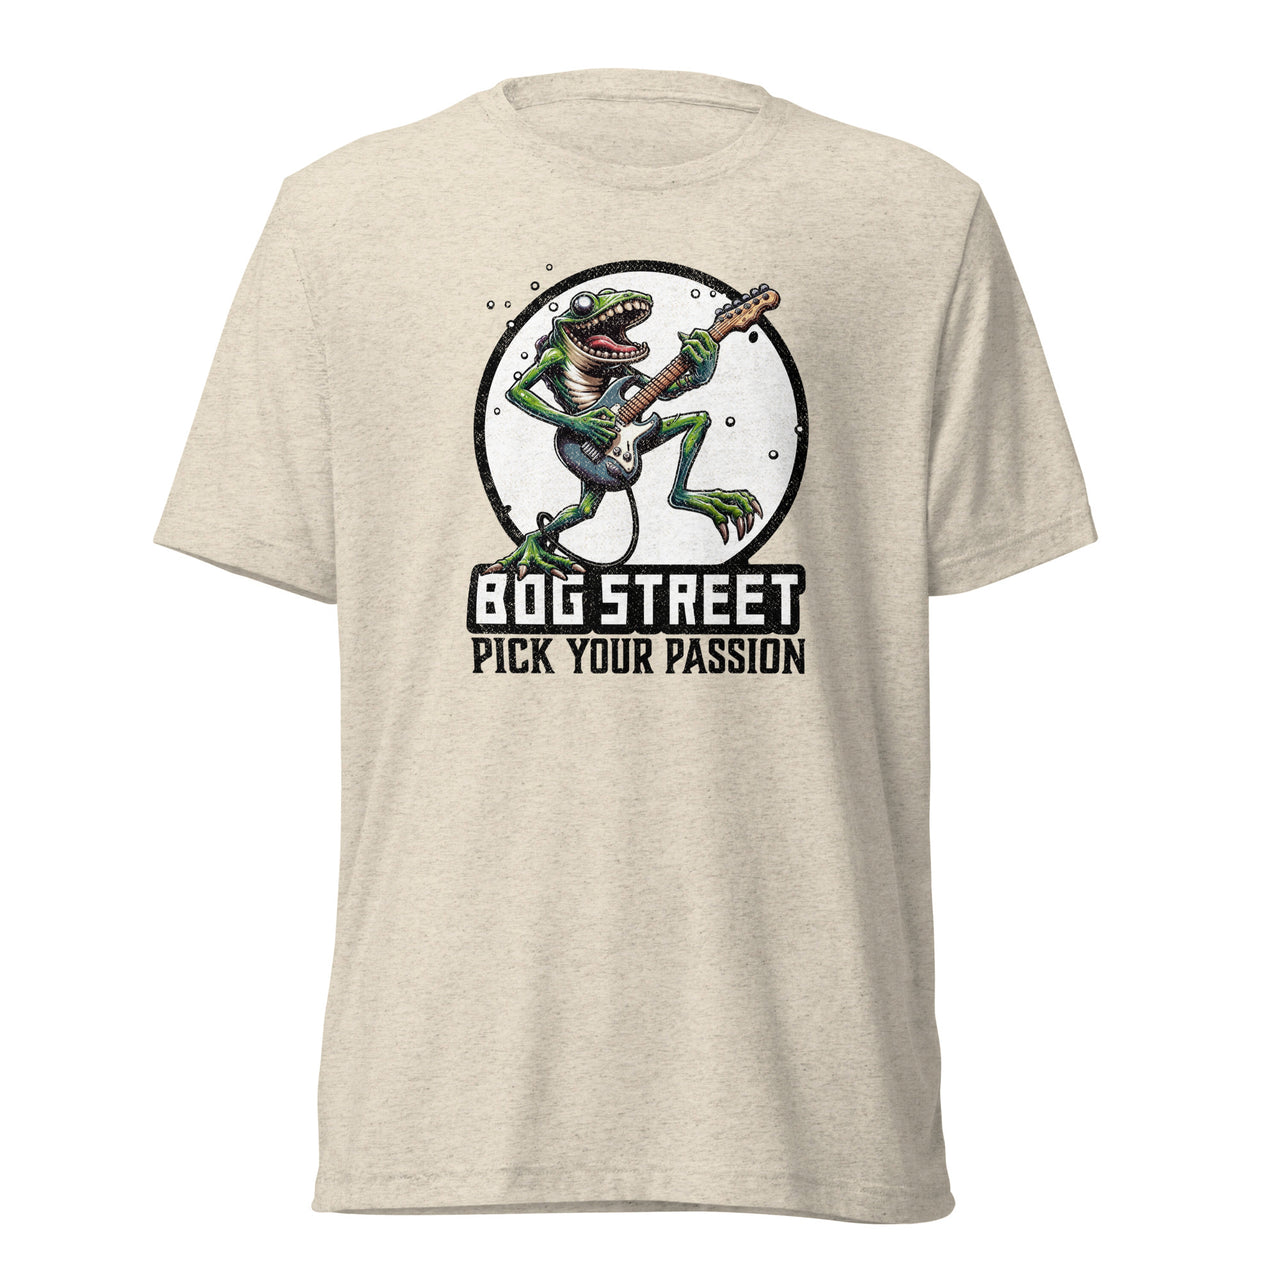 Bog Street Frog Jam - Pick Your Passion (vintage weathered look)